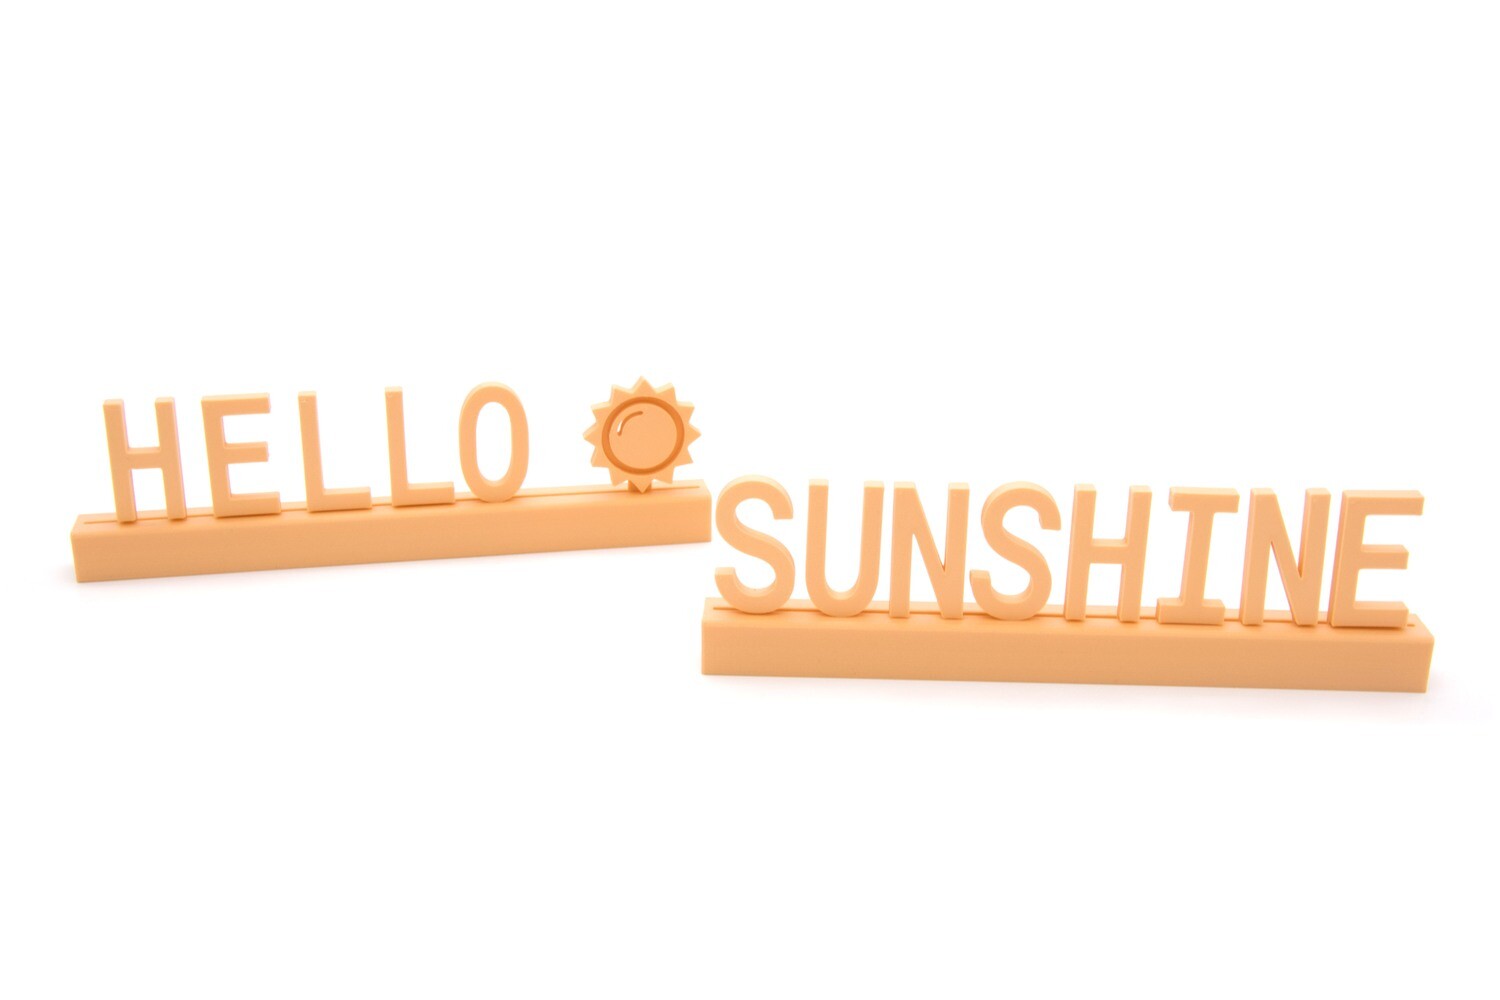 "Hello sunshine"